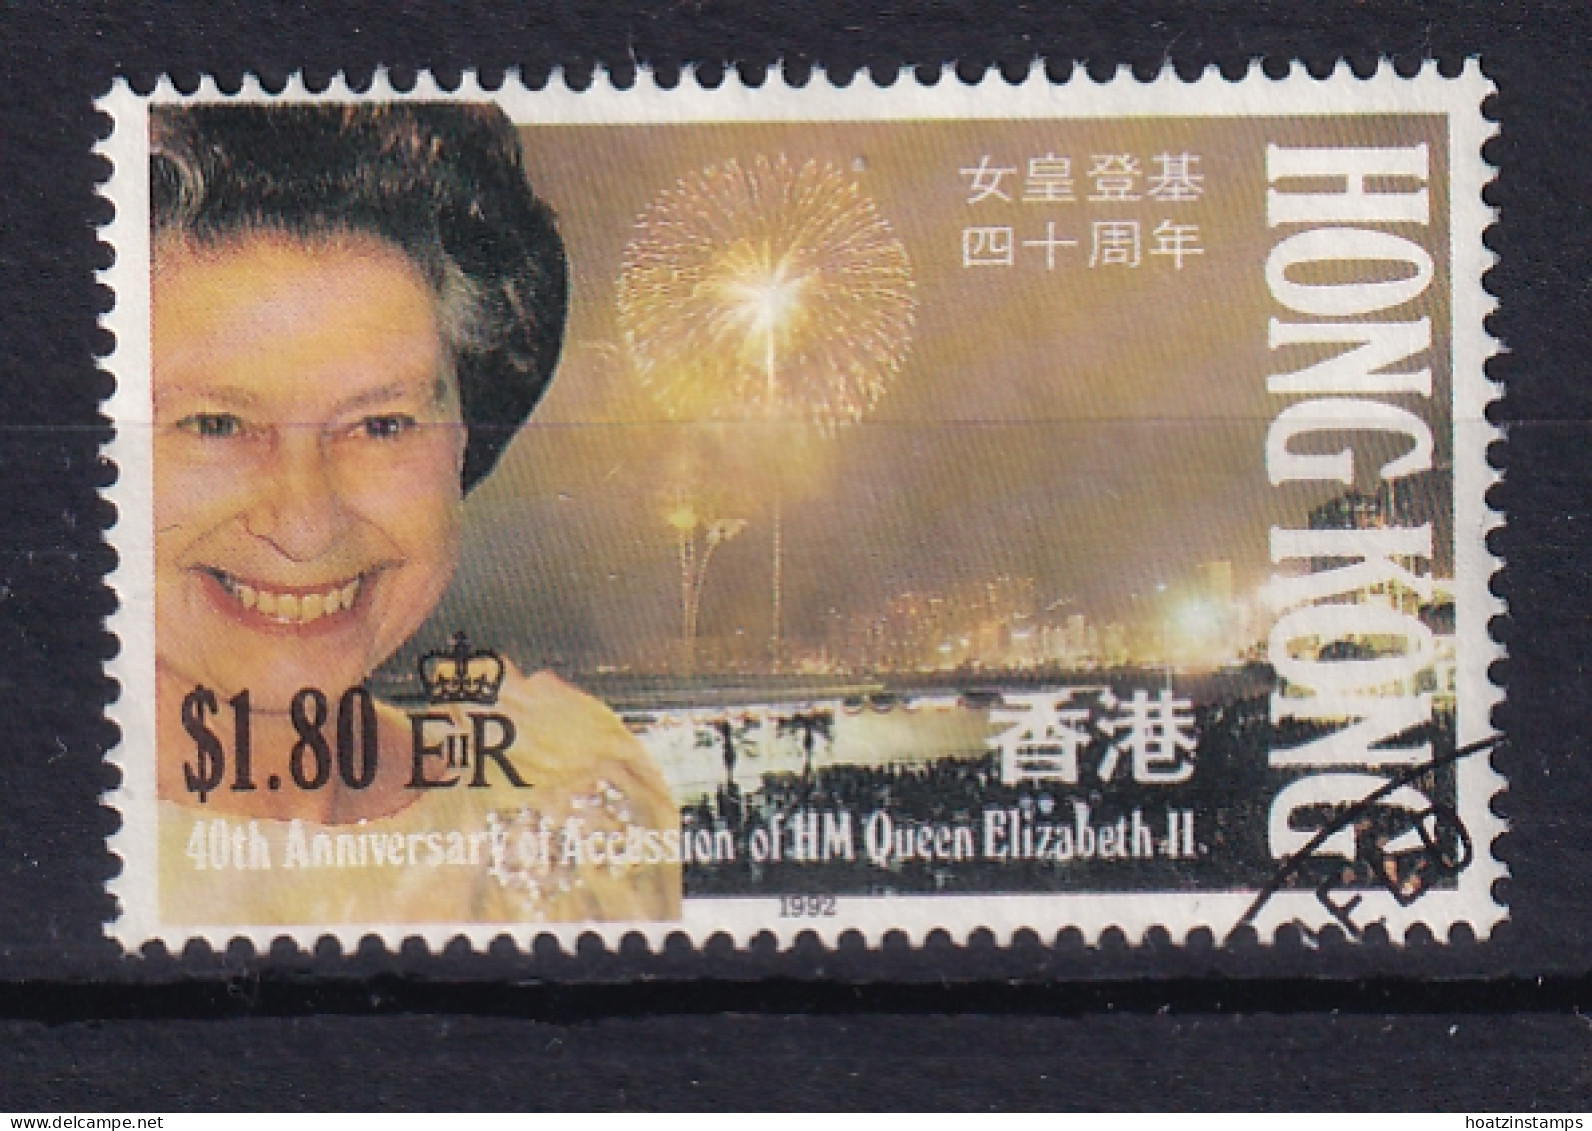 Hong Kong: 1992   40th Anniv Of QE II Accession   SG693    $1.80   Used  - Usados